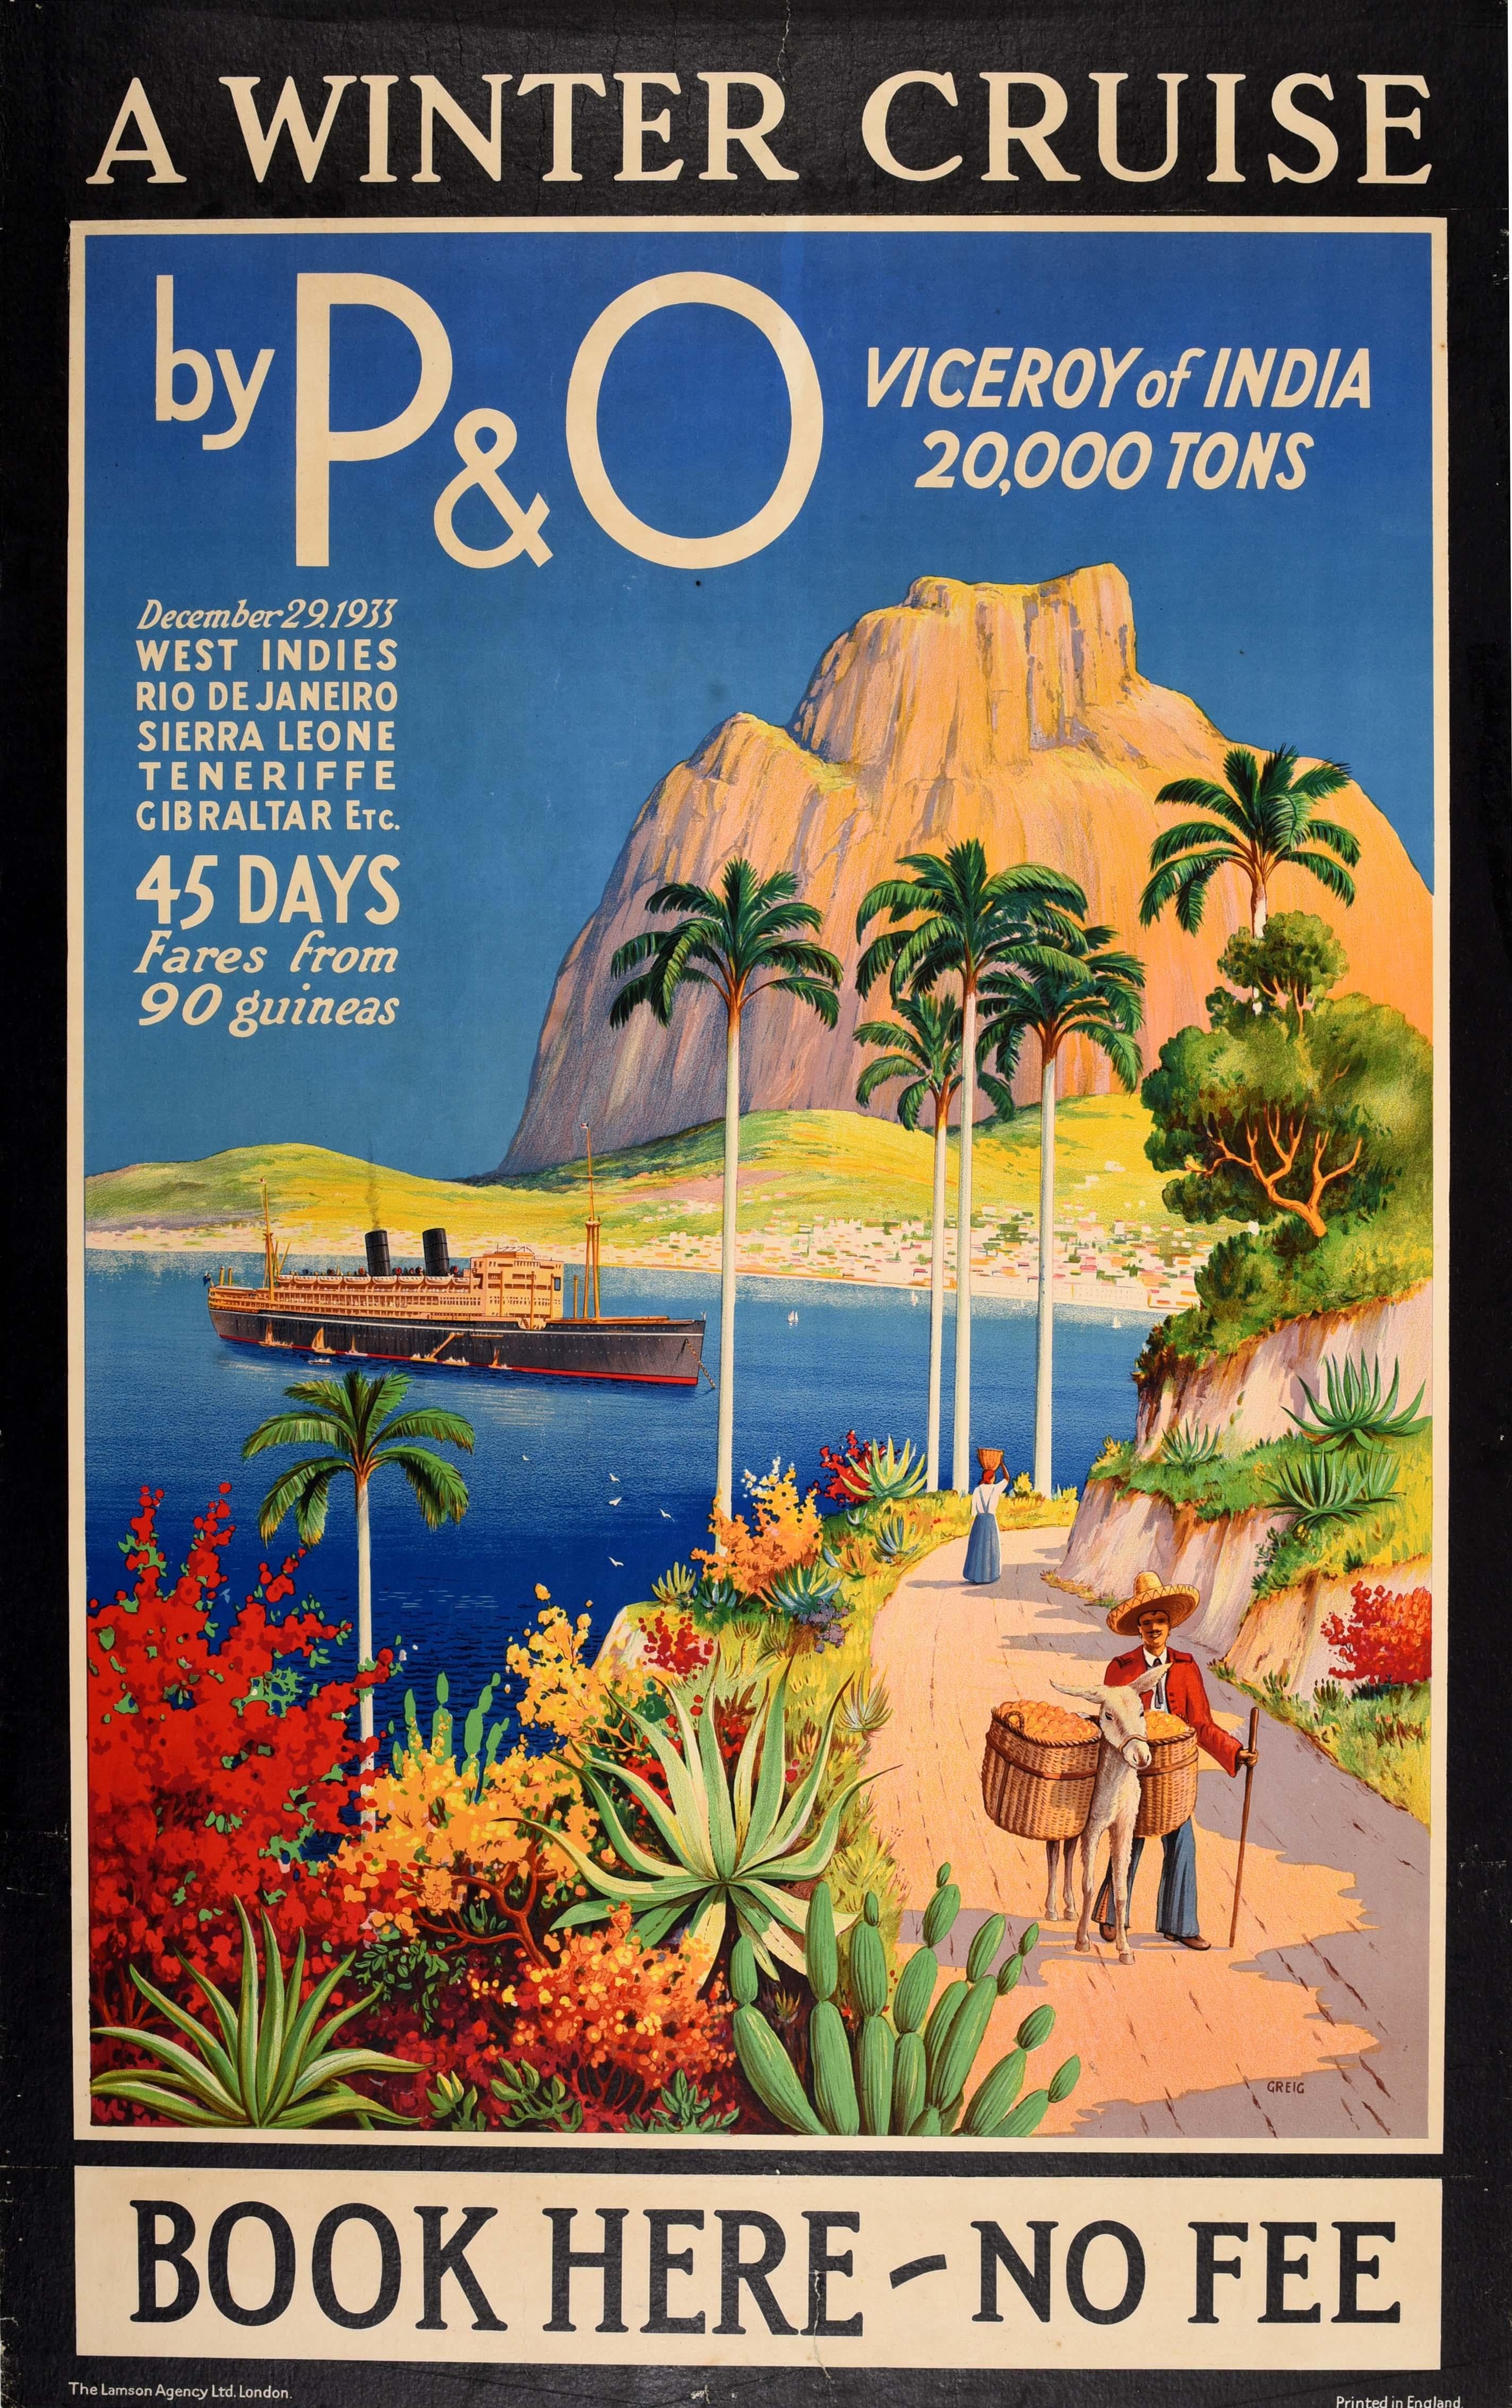 James Greig Print - Original Vintage Travel Poster P&O Viceroy Of India Gibraltar Winter Cruise Ship